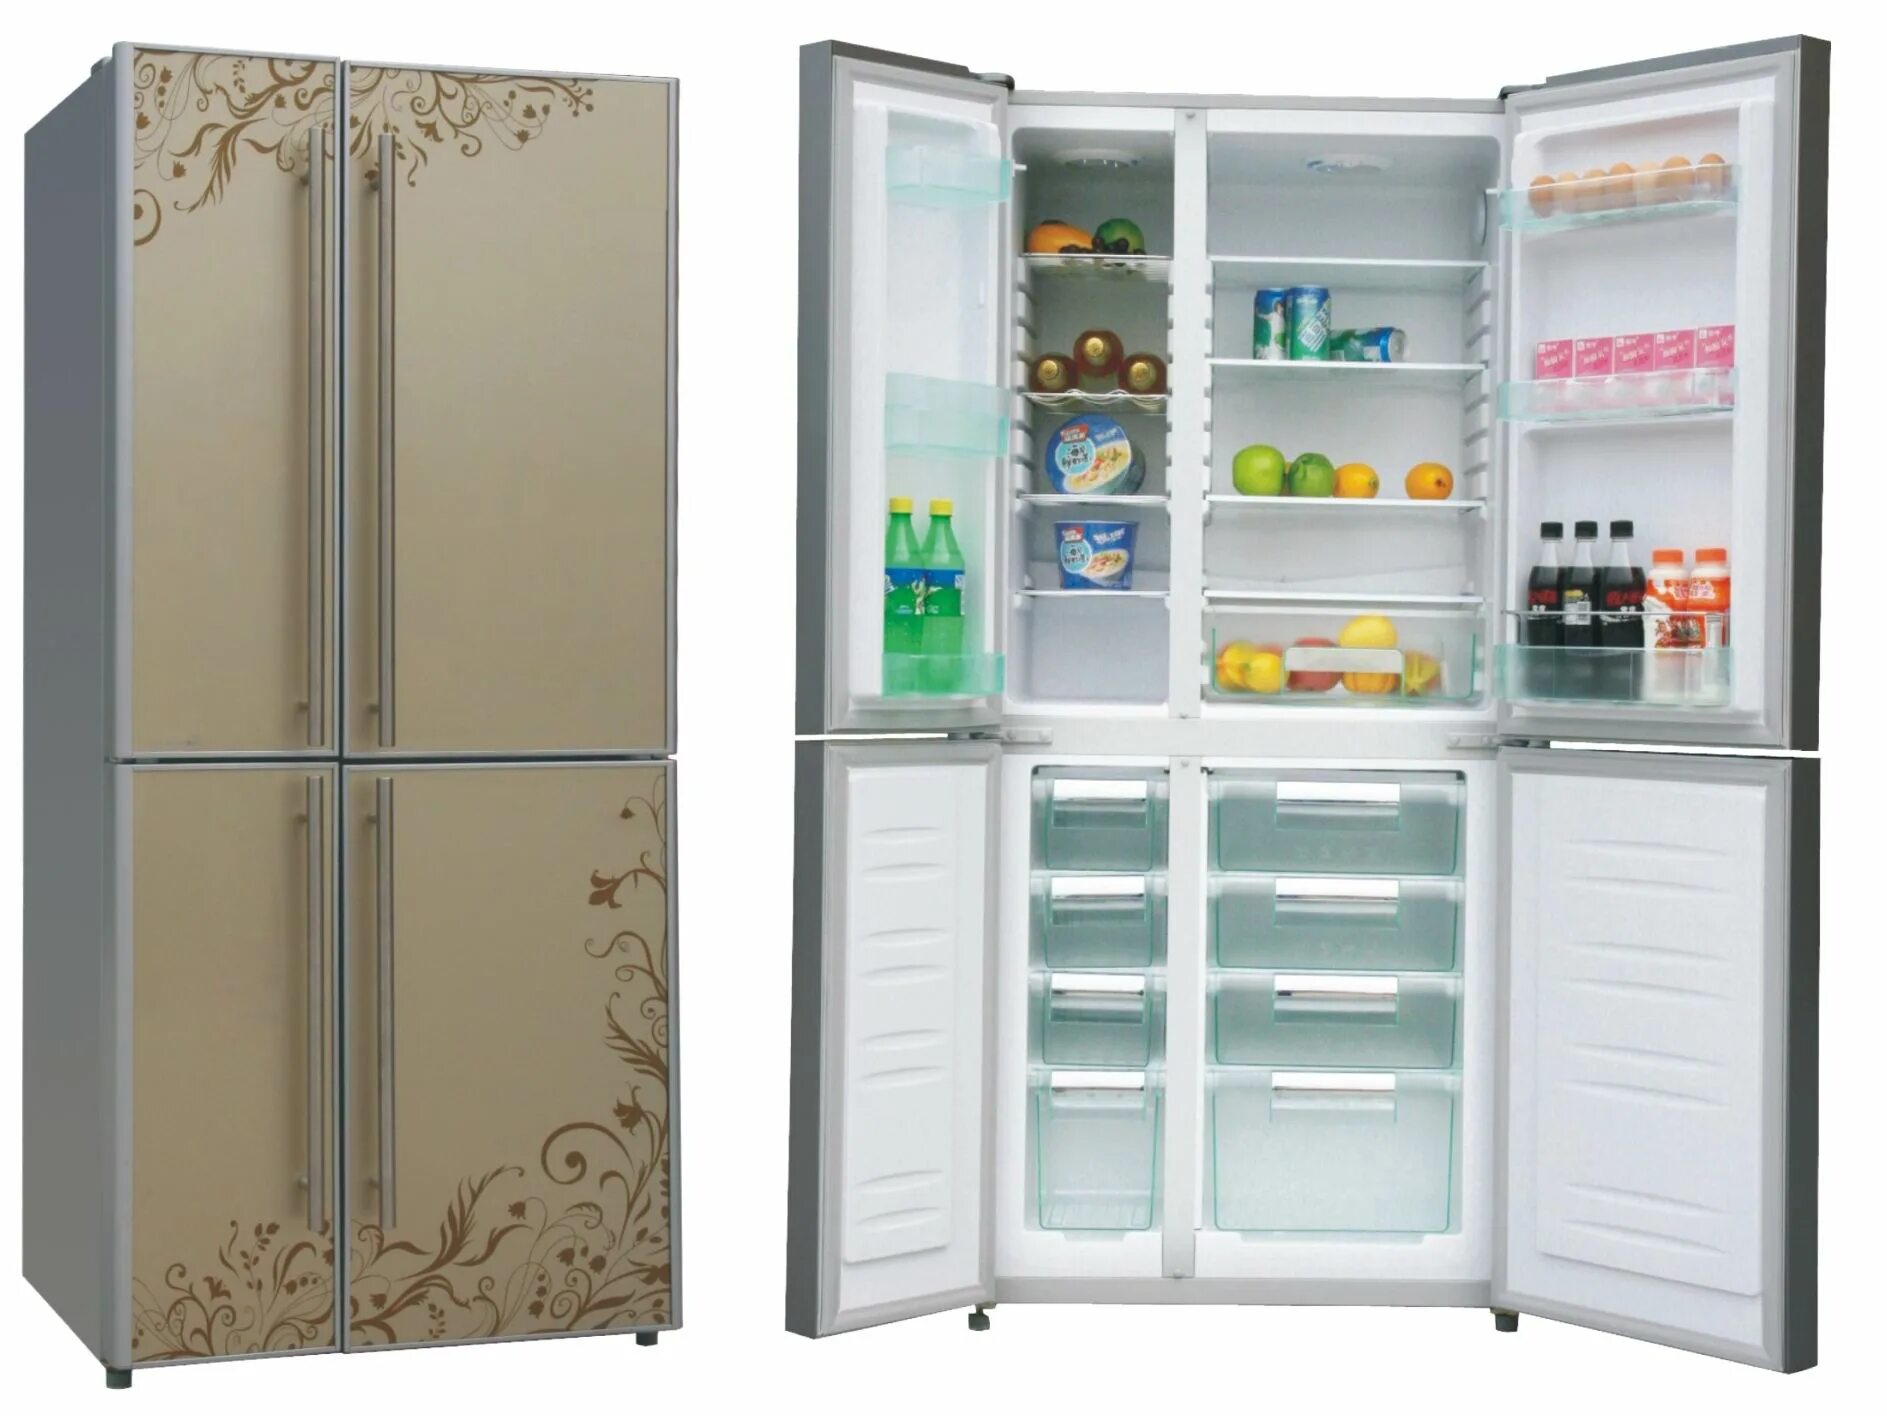 Холодильник (Side-by-Side) Ascoli acdb520wib. Холодильник (Side-by-Side) LG GC-q247cbdc. Холодильник Side by Side с большой морозилкой. Холодильник (Side-by-Side) Thomson ssc30ei32. В каких магазинах можно купить холодильники